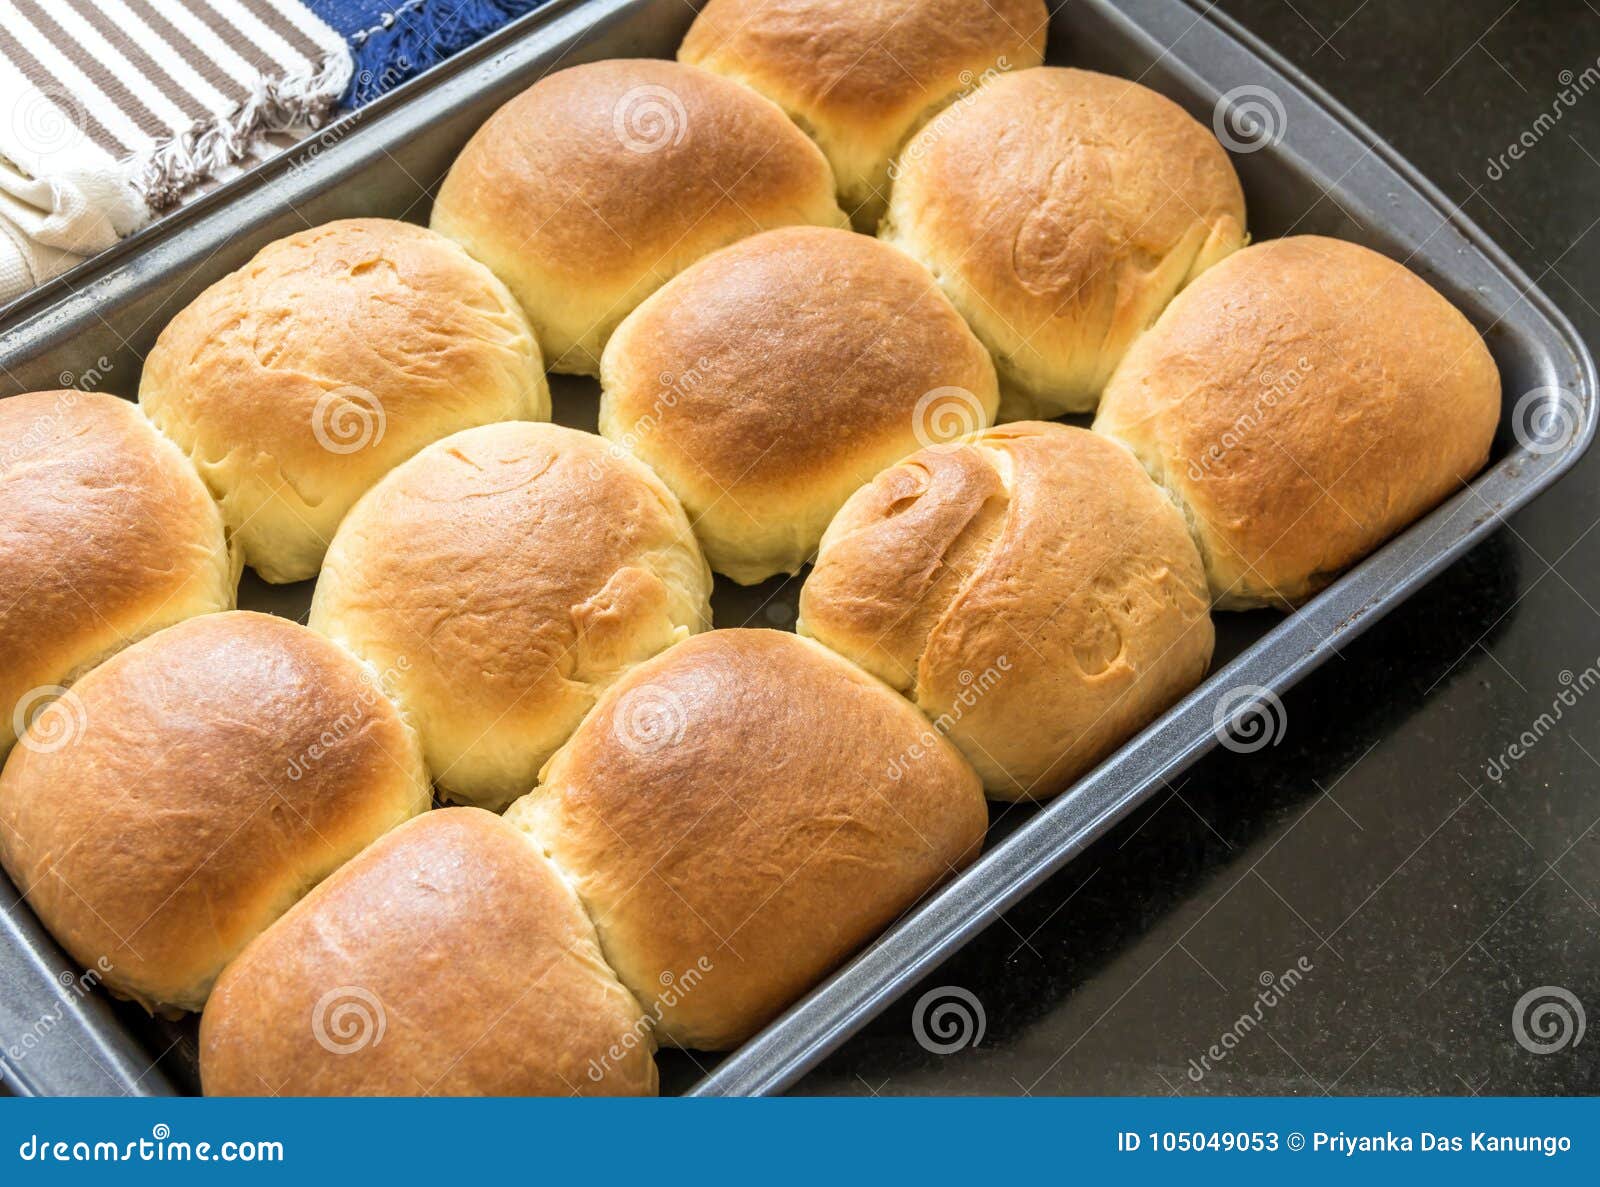 dinner rolls - group of twelve butter bun in a baking tray